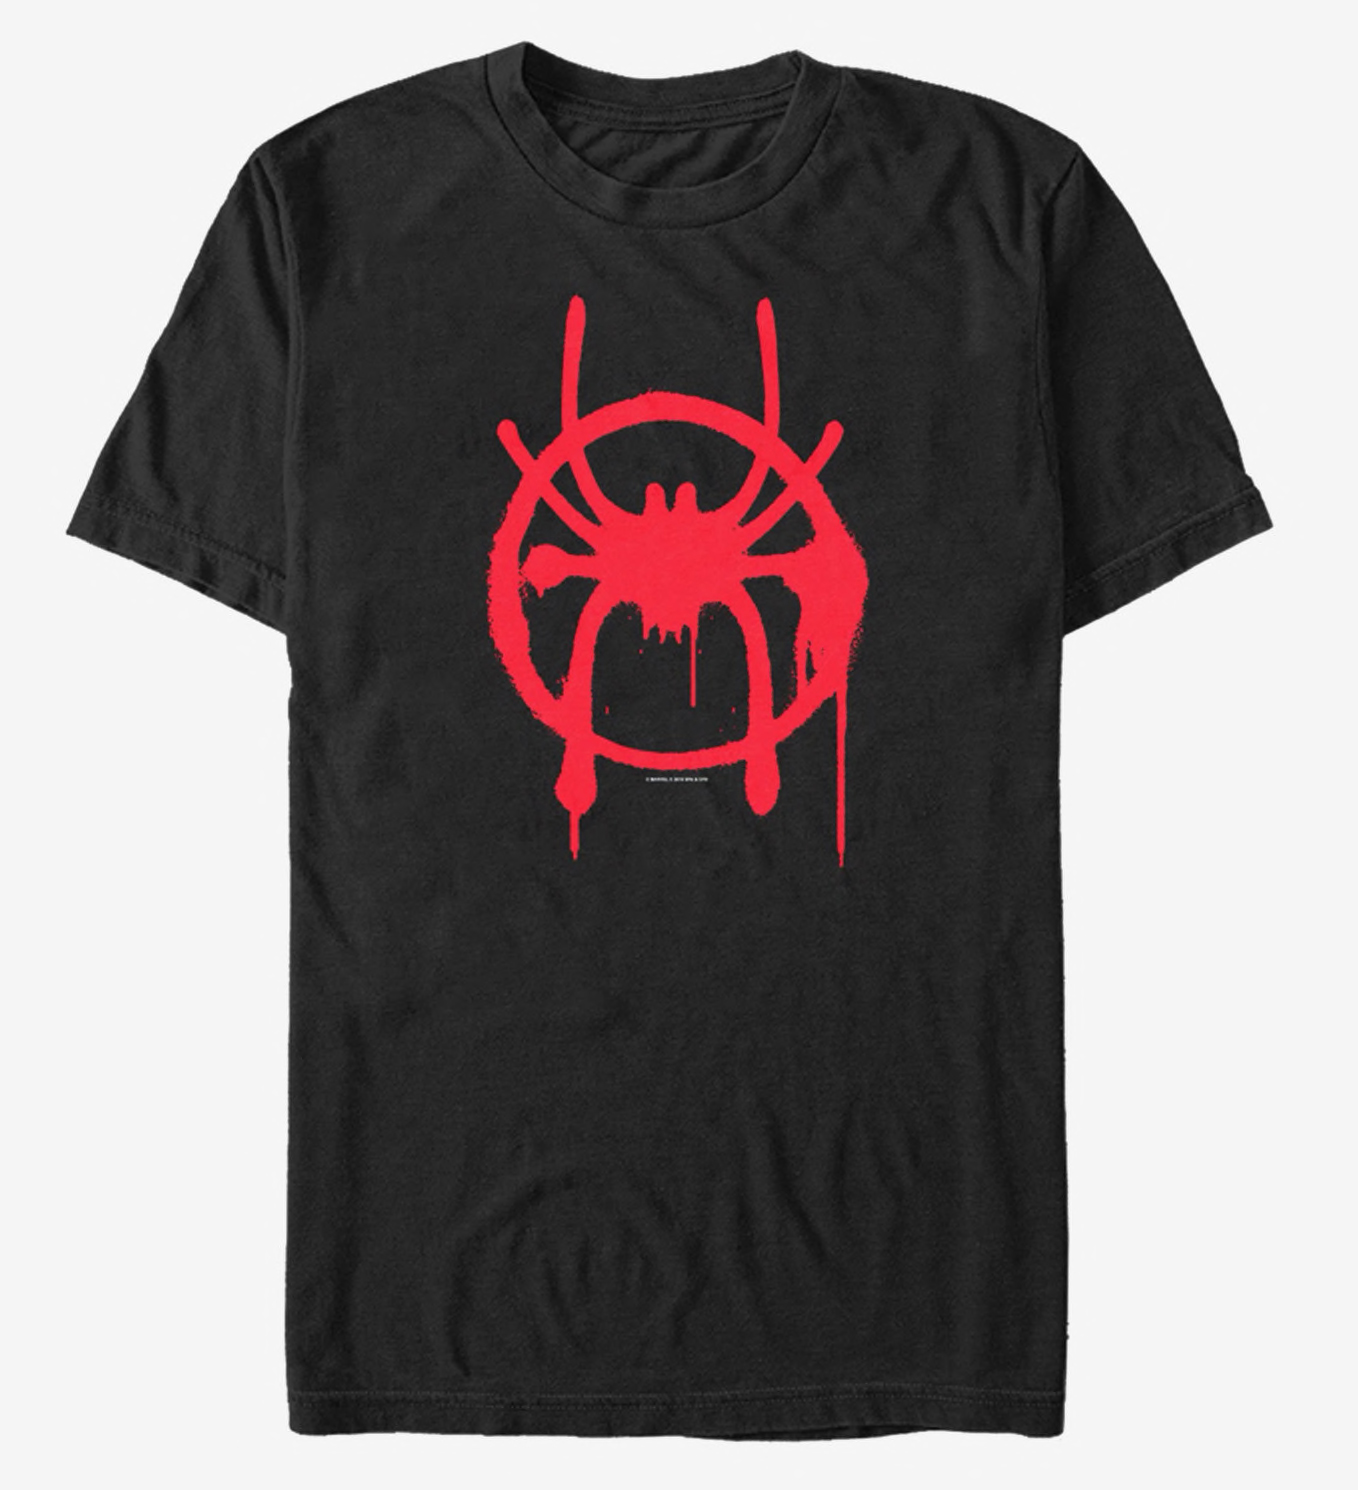 spiderman-spider-verse-shirt-match-jordan-1-origin-story-1